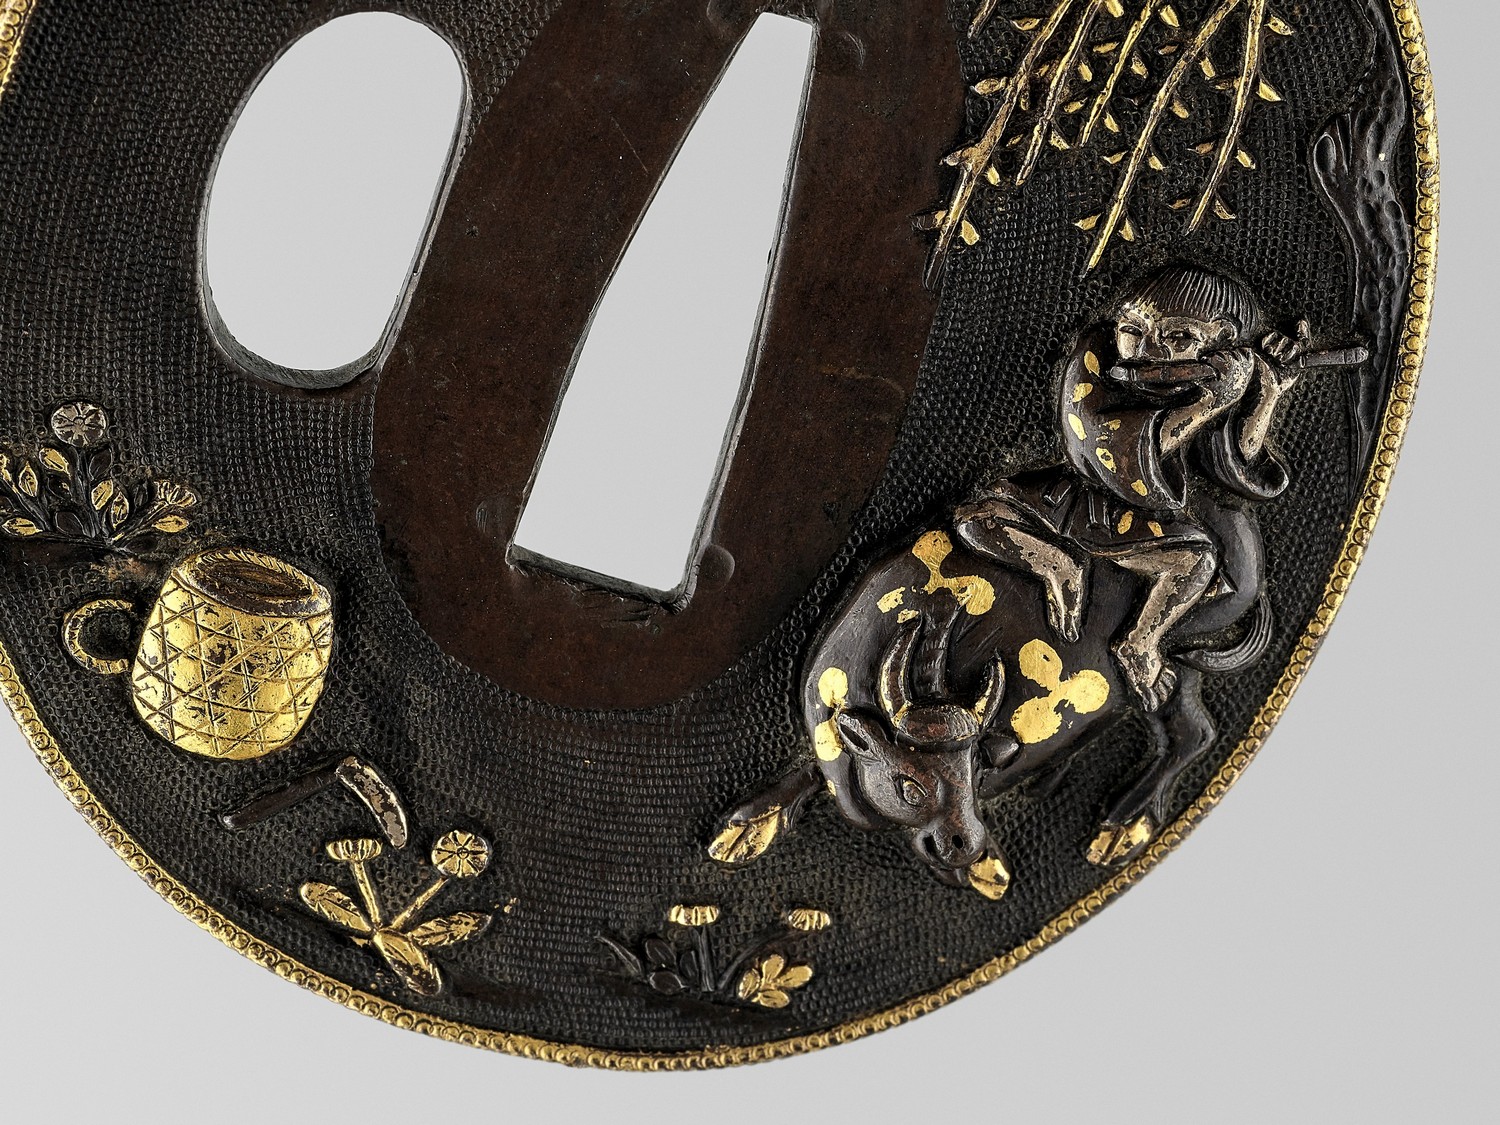 A GOLD AND SILVER-INLAID SHAKUDO TSUBA WITH OX AND BOKUDO - Image 2 of 4